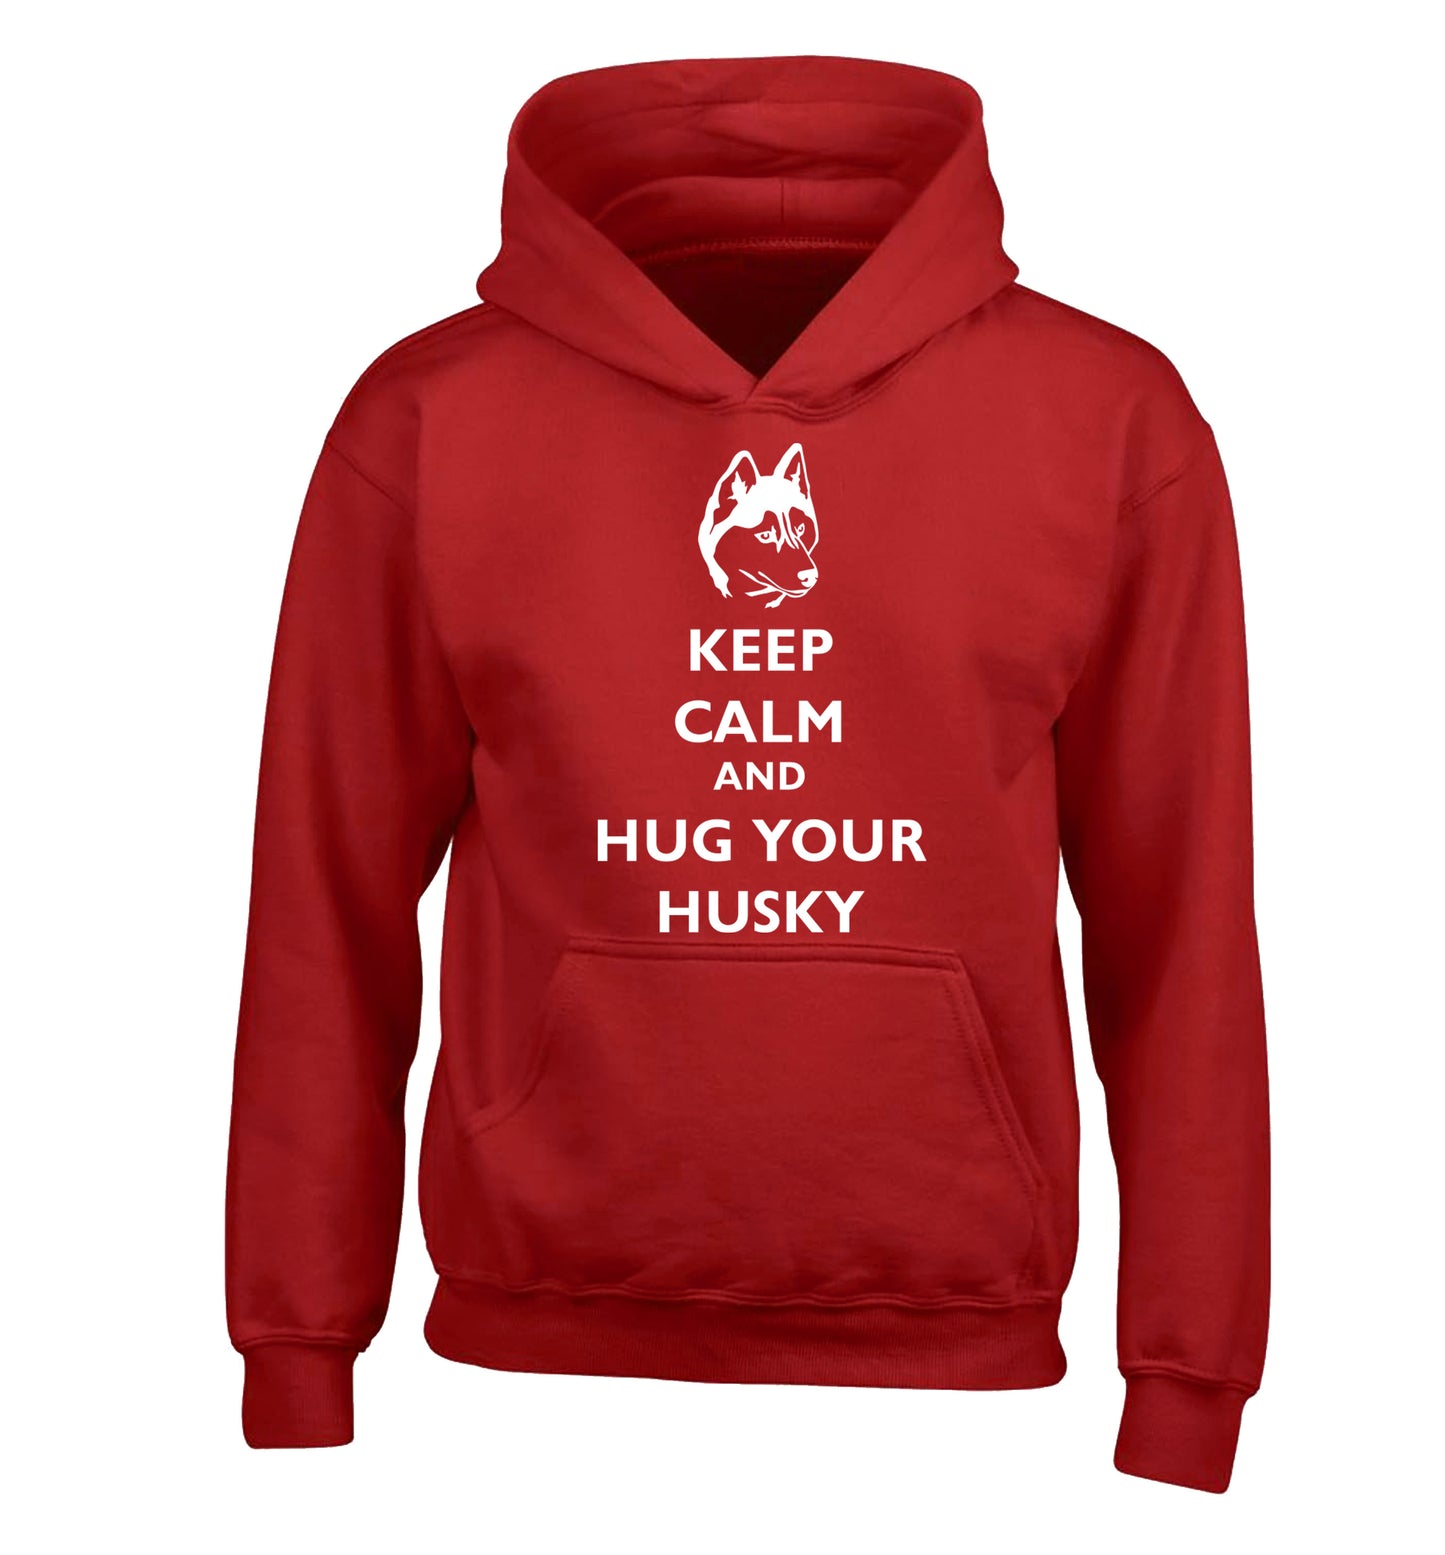 Keep calm and hug your husky children's red hoodie 12-13 Years